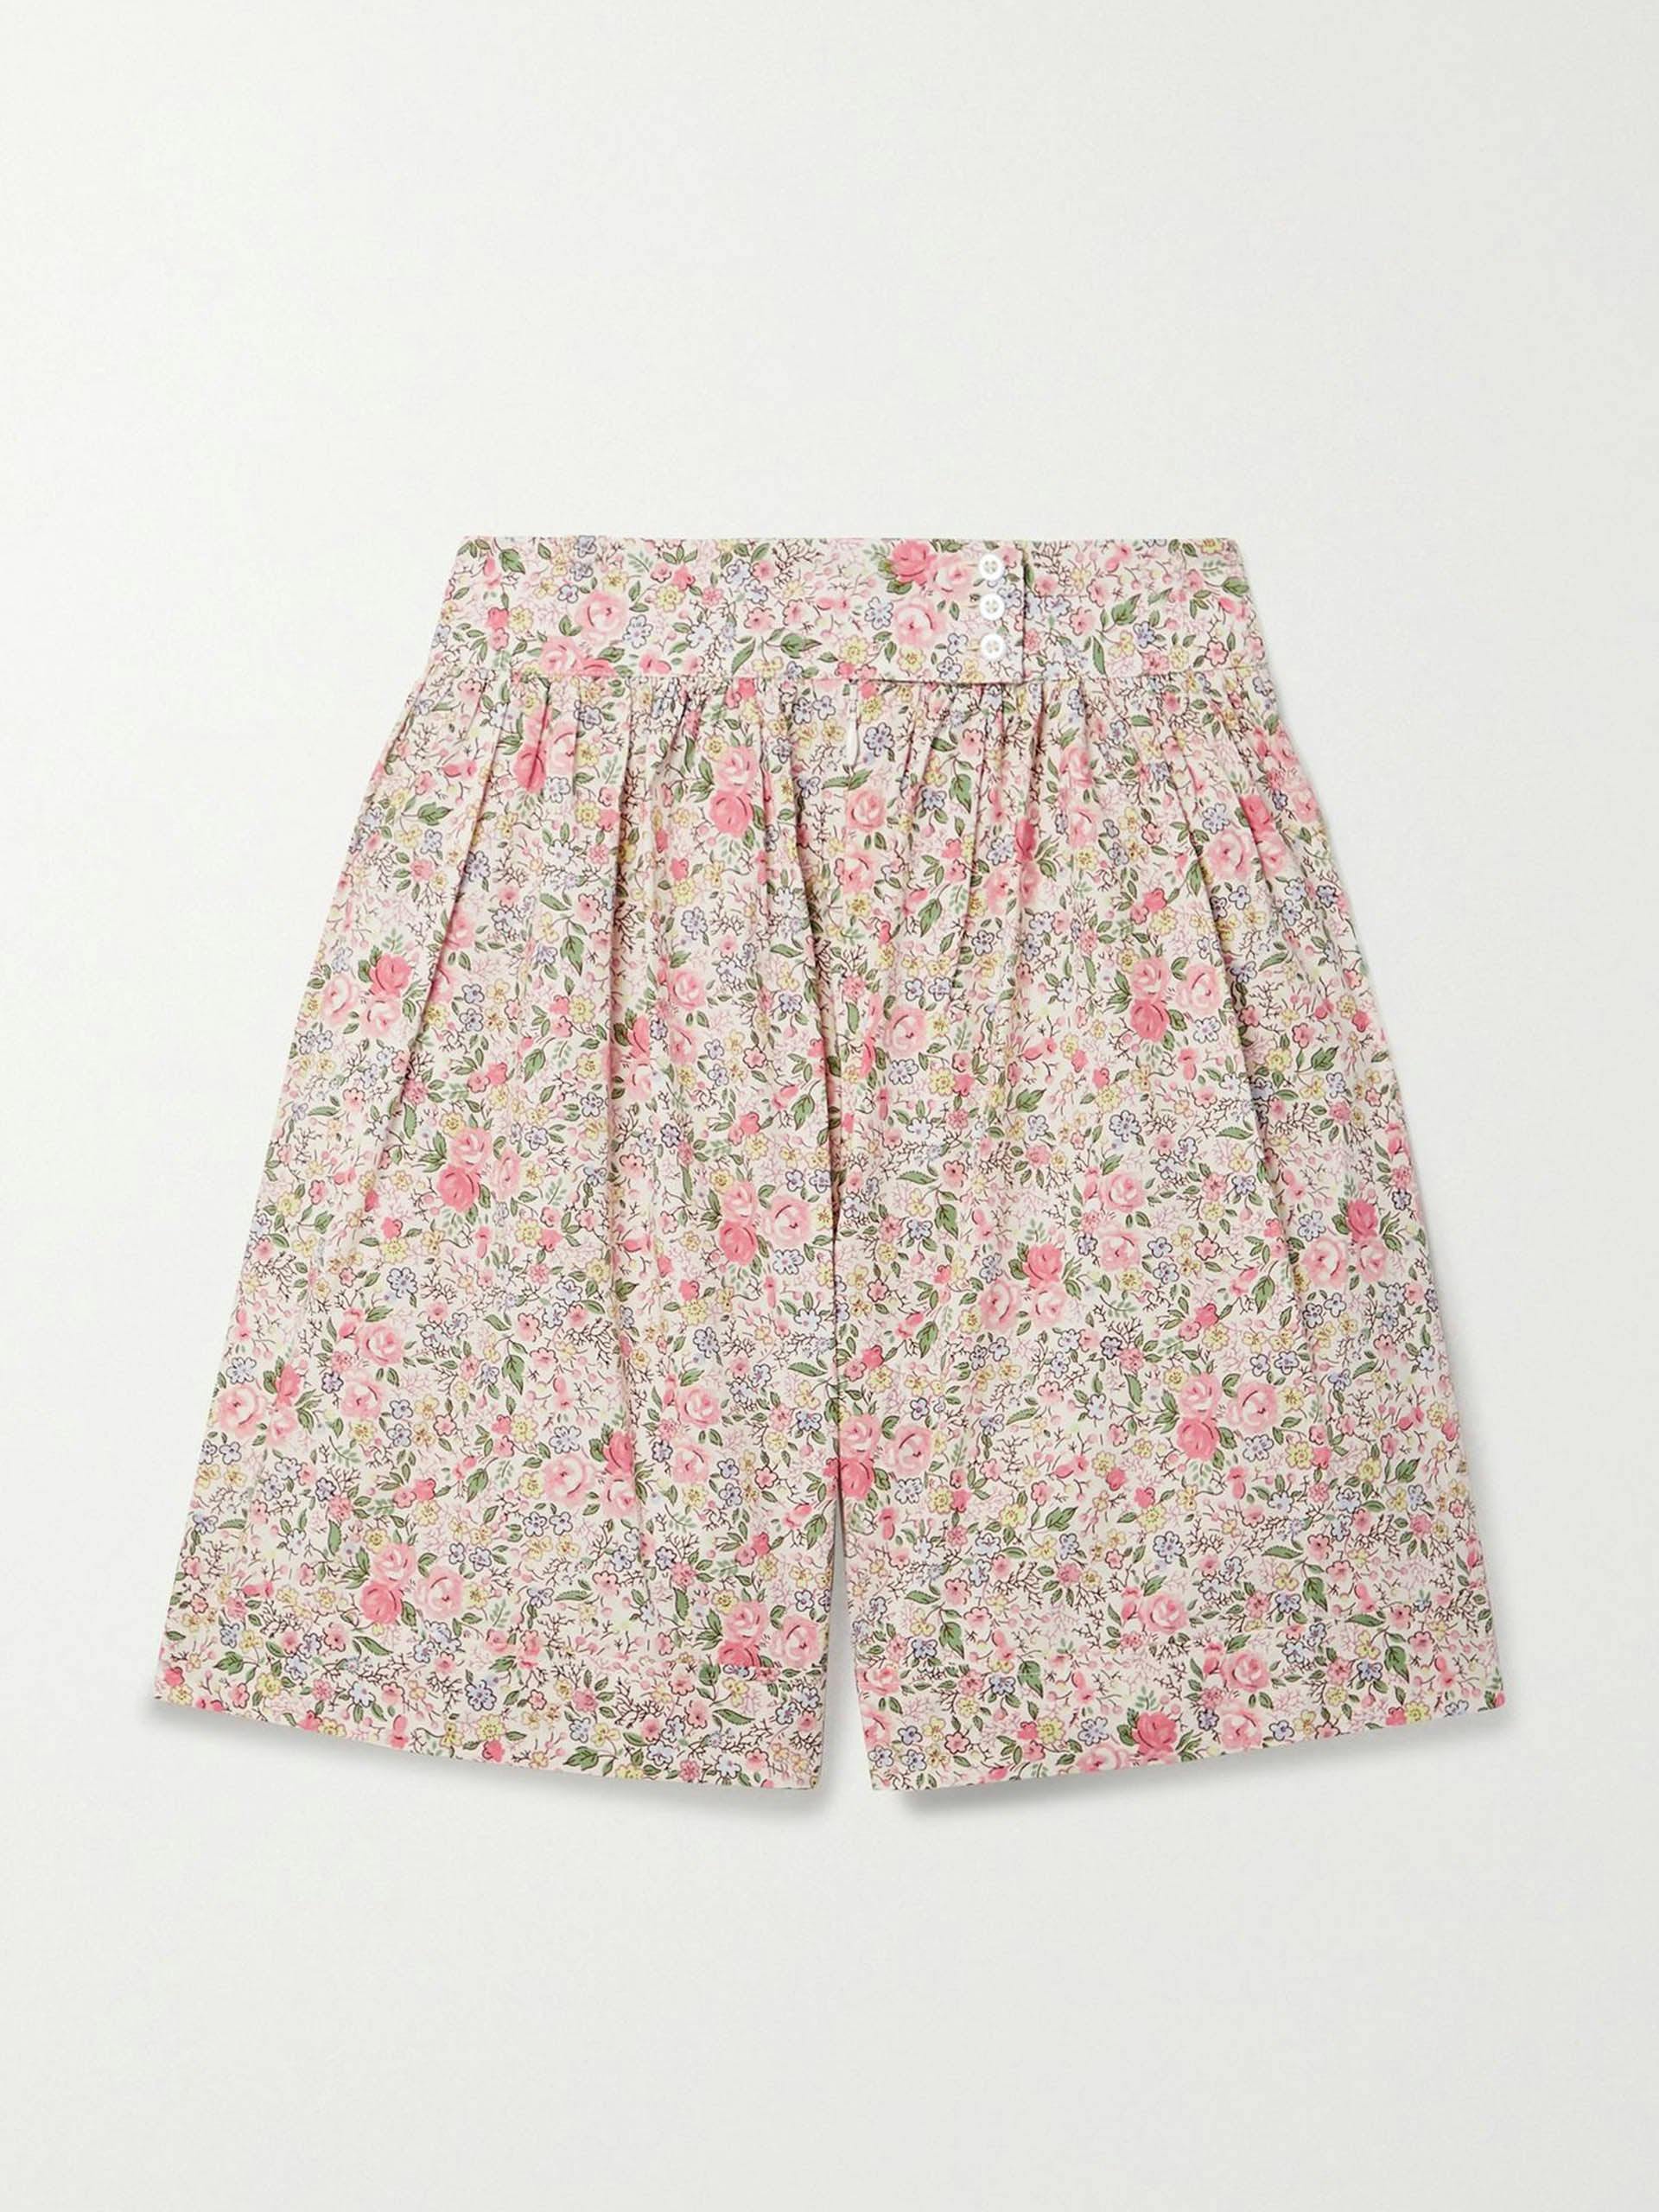 Pink floral printed shorts